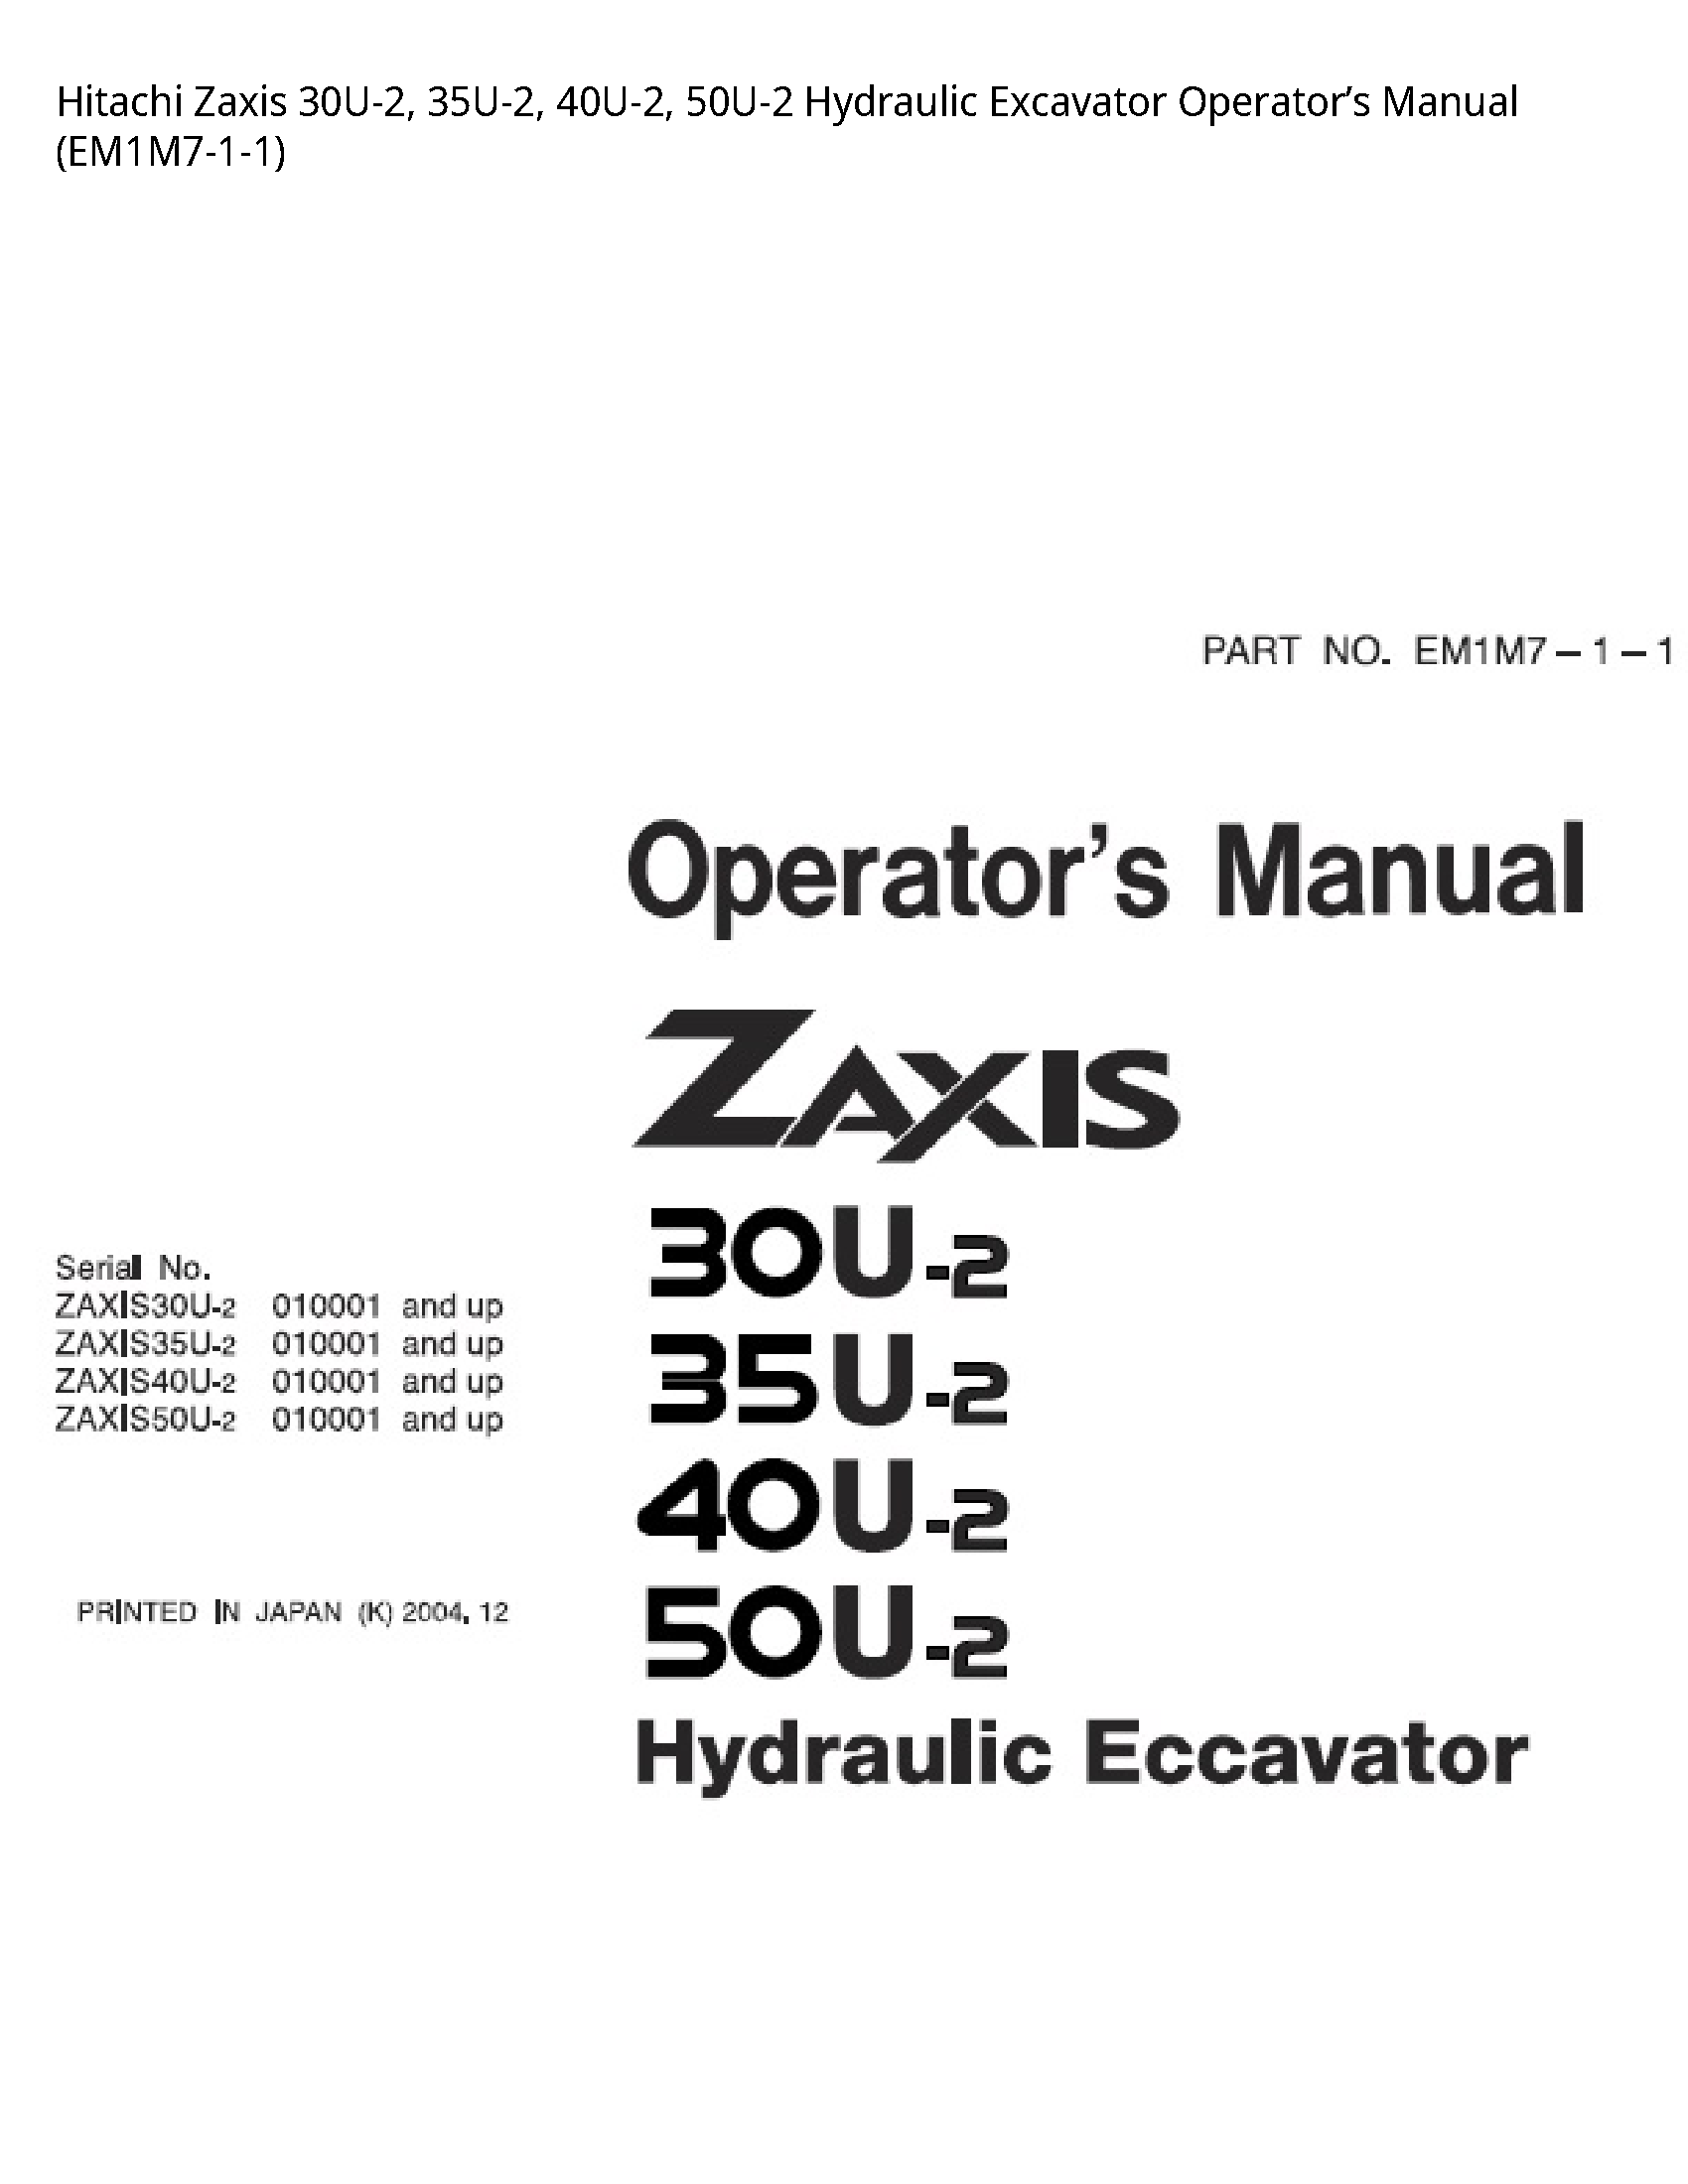 Hitachi 30U-2 Zaxis Hydraulic Excavator Operator’s manual